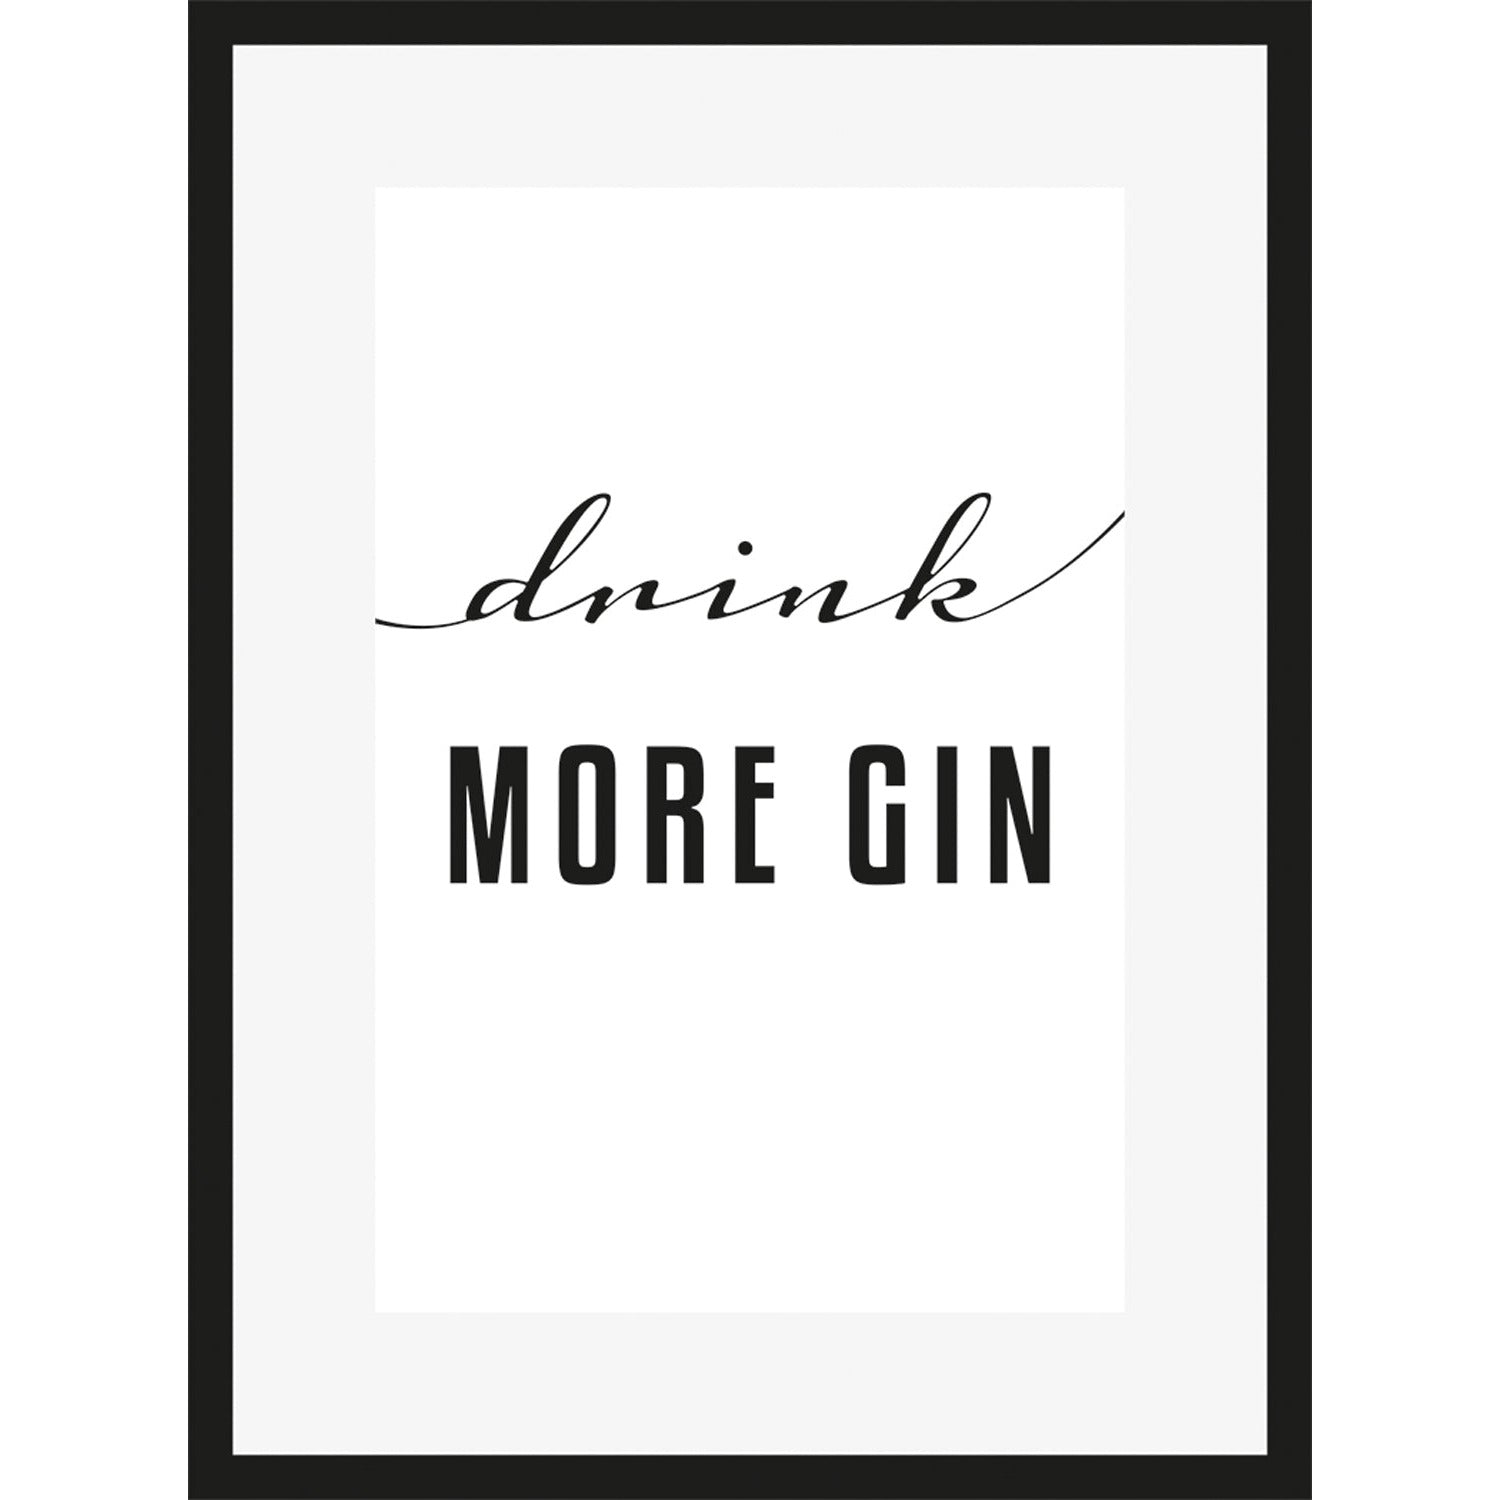 Rahmenbild - Drink More Gin